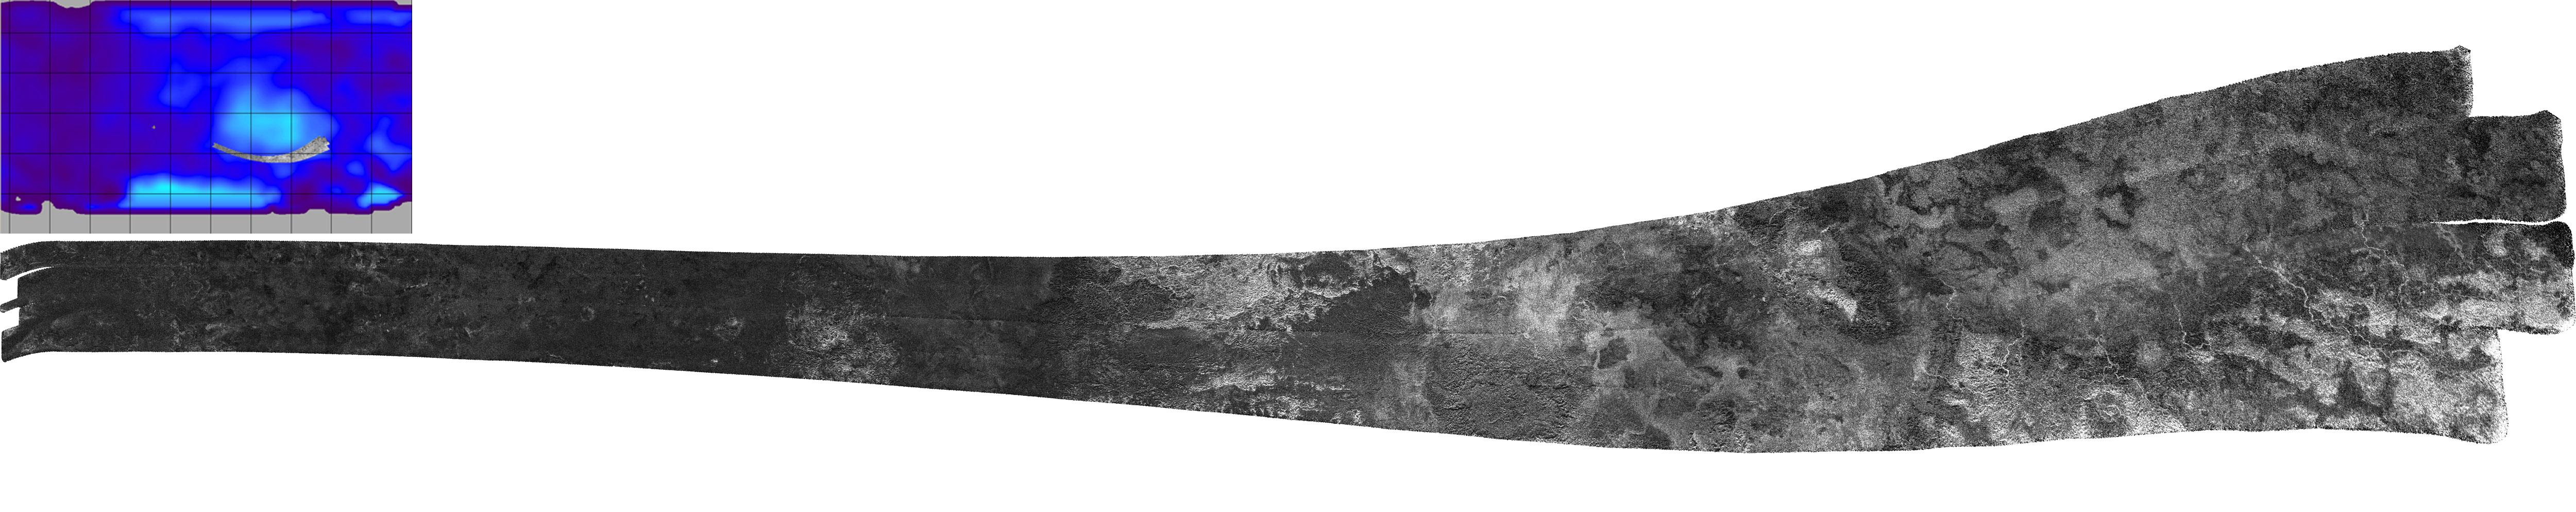 Radar image of the southern edge of Titan's region Xanadu